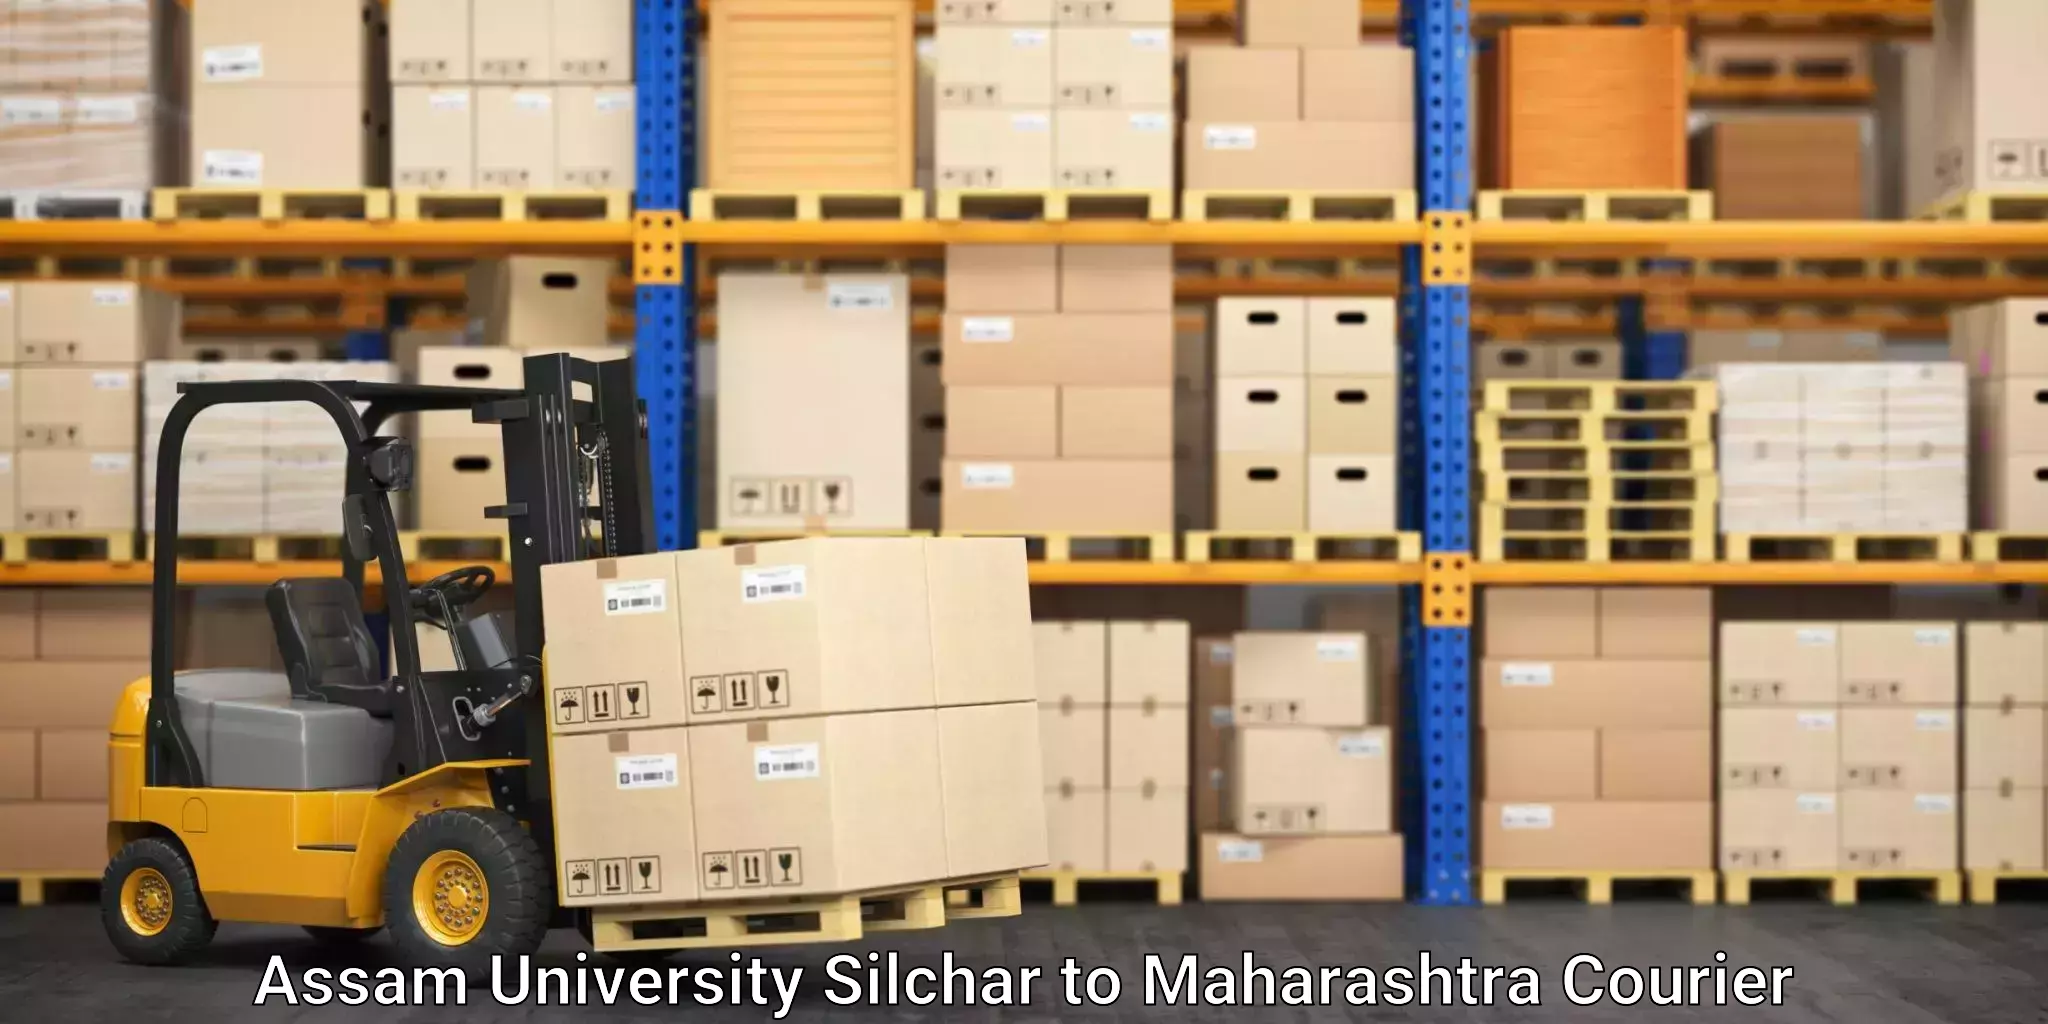 Express delivery capabilities Assam University Silchar to Savitribai Phule Pune University